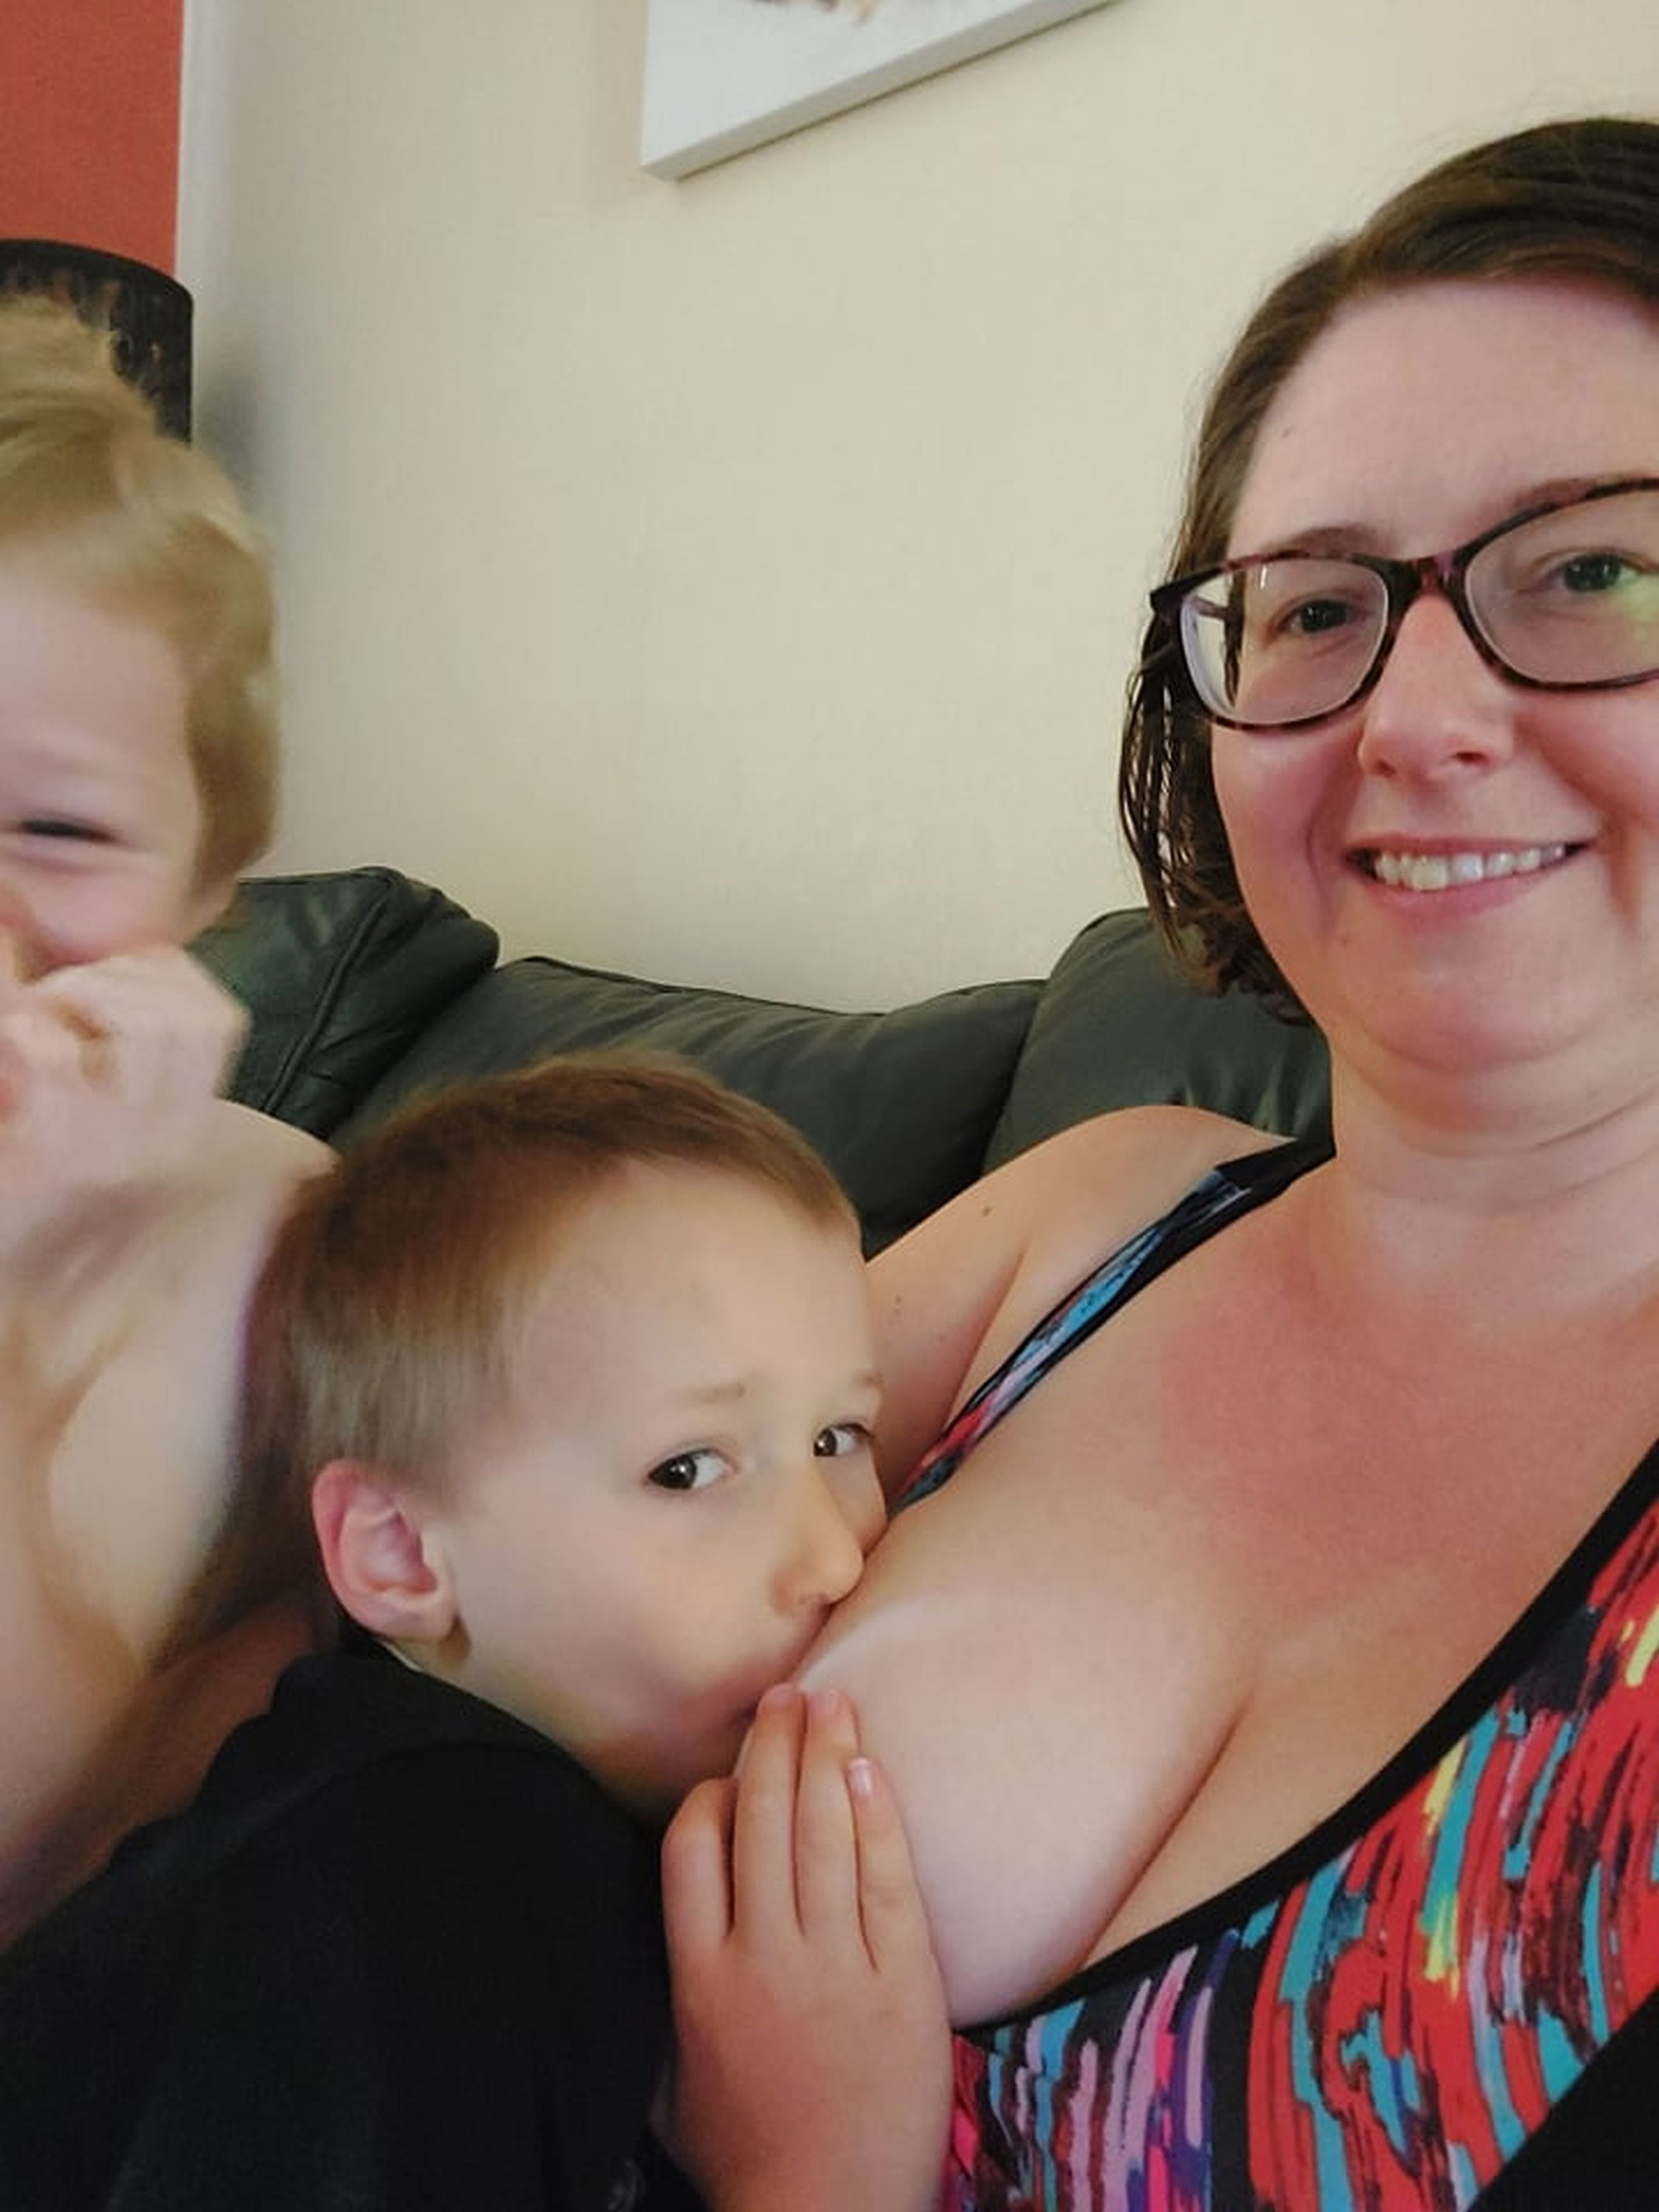 brandon butterworth recommends Mom Breastfeeding Adult Son